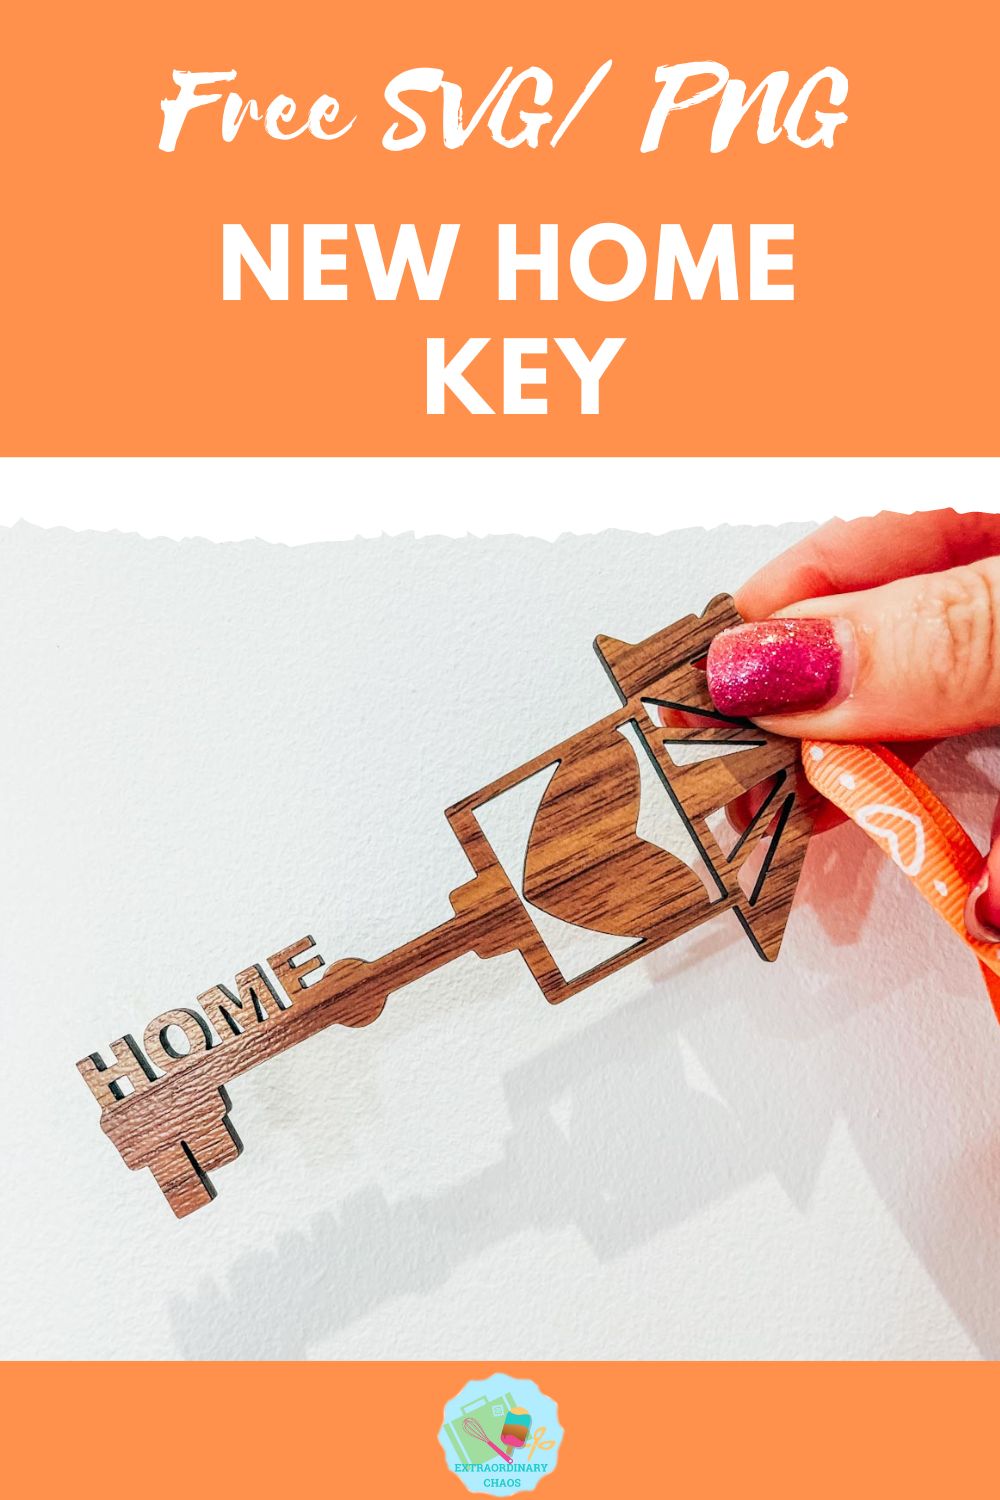 Free New Home Key SVG, PNG for Cricut, Glowforge